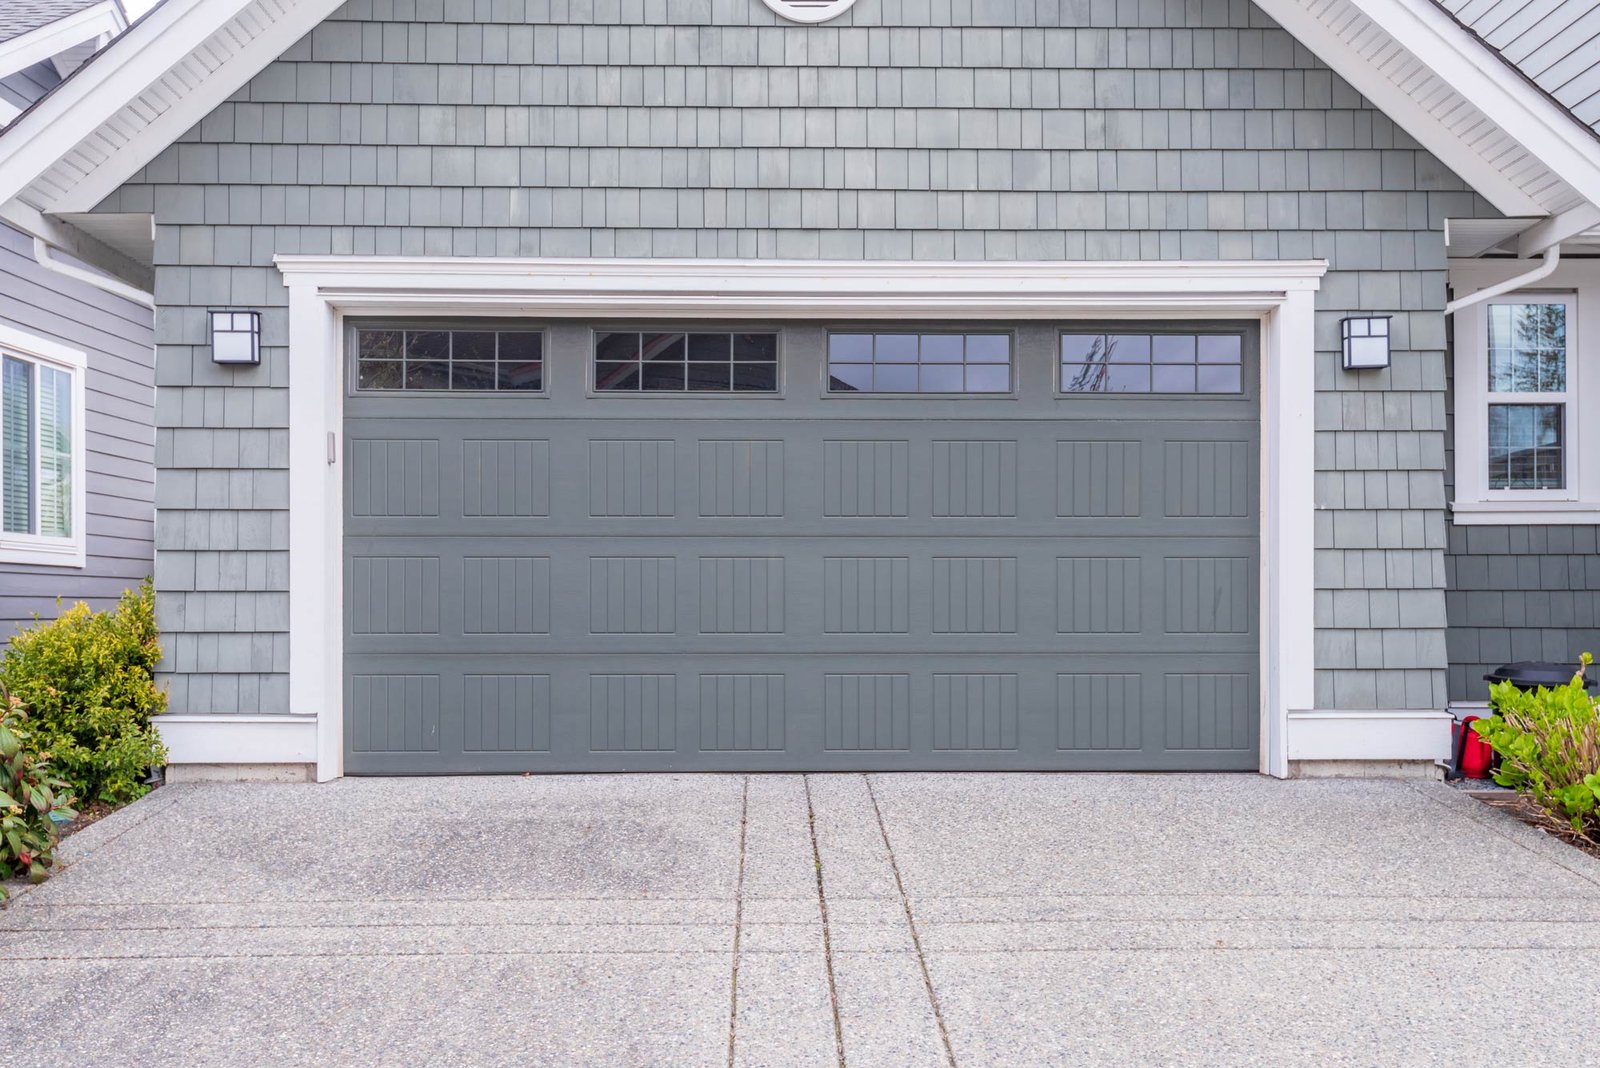 Finding Trustworthy Garage Door Assistance in Gaithersburg MD